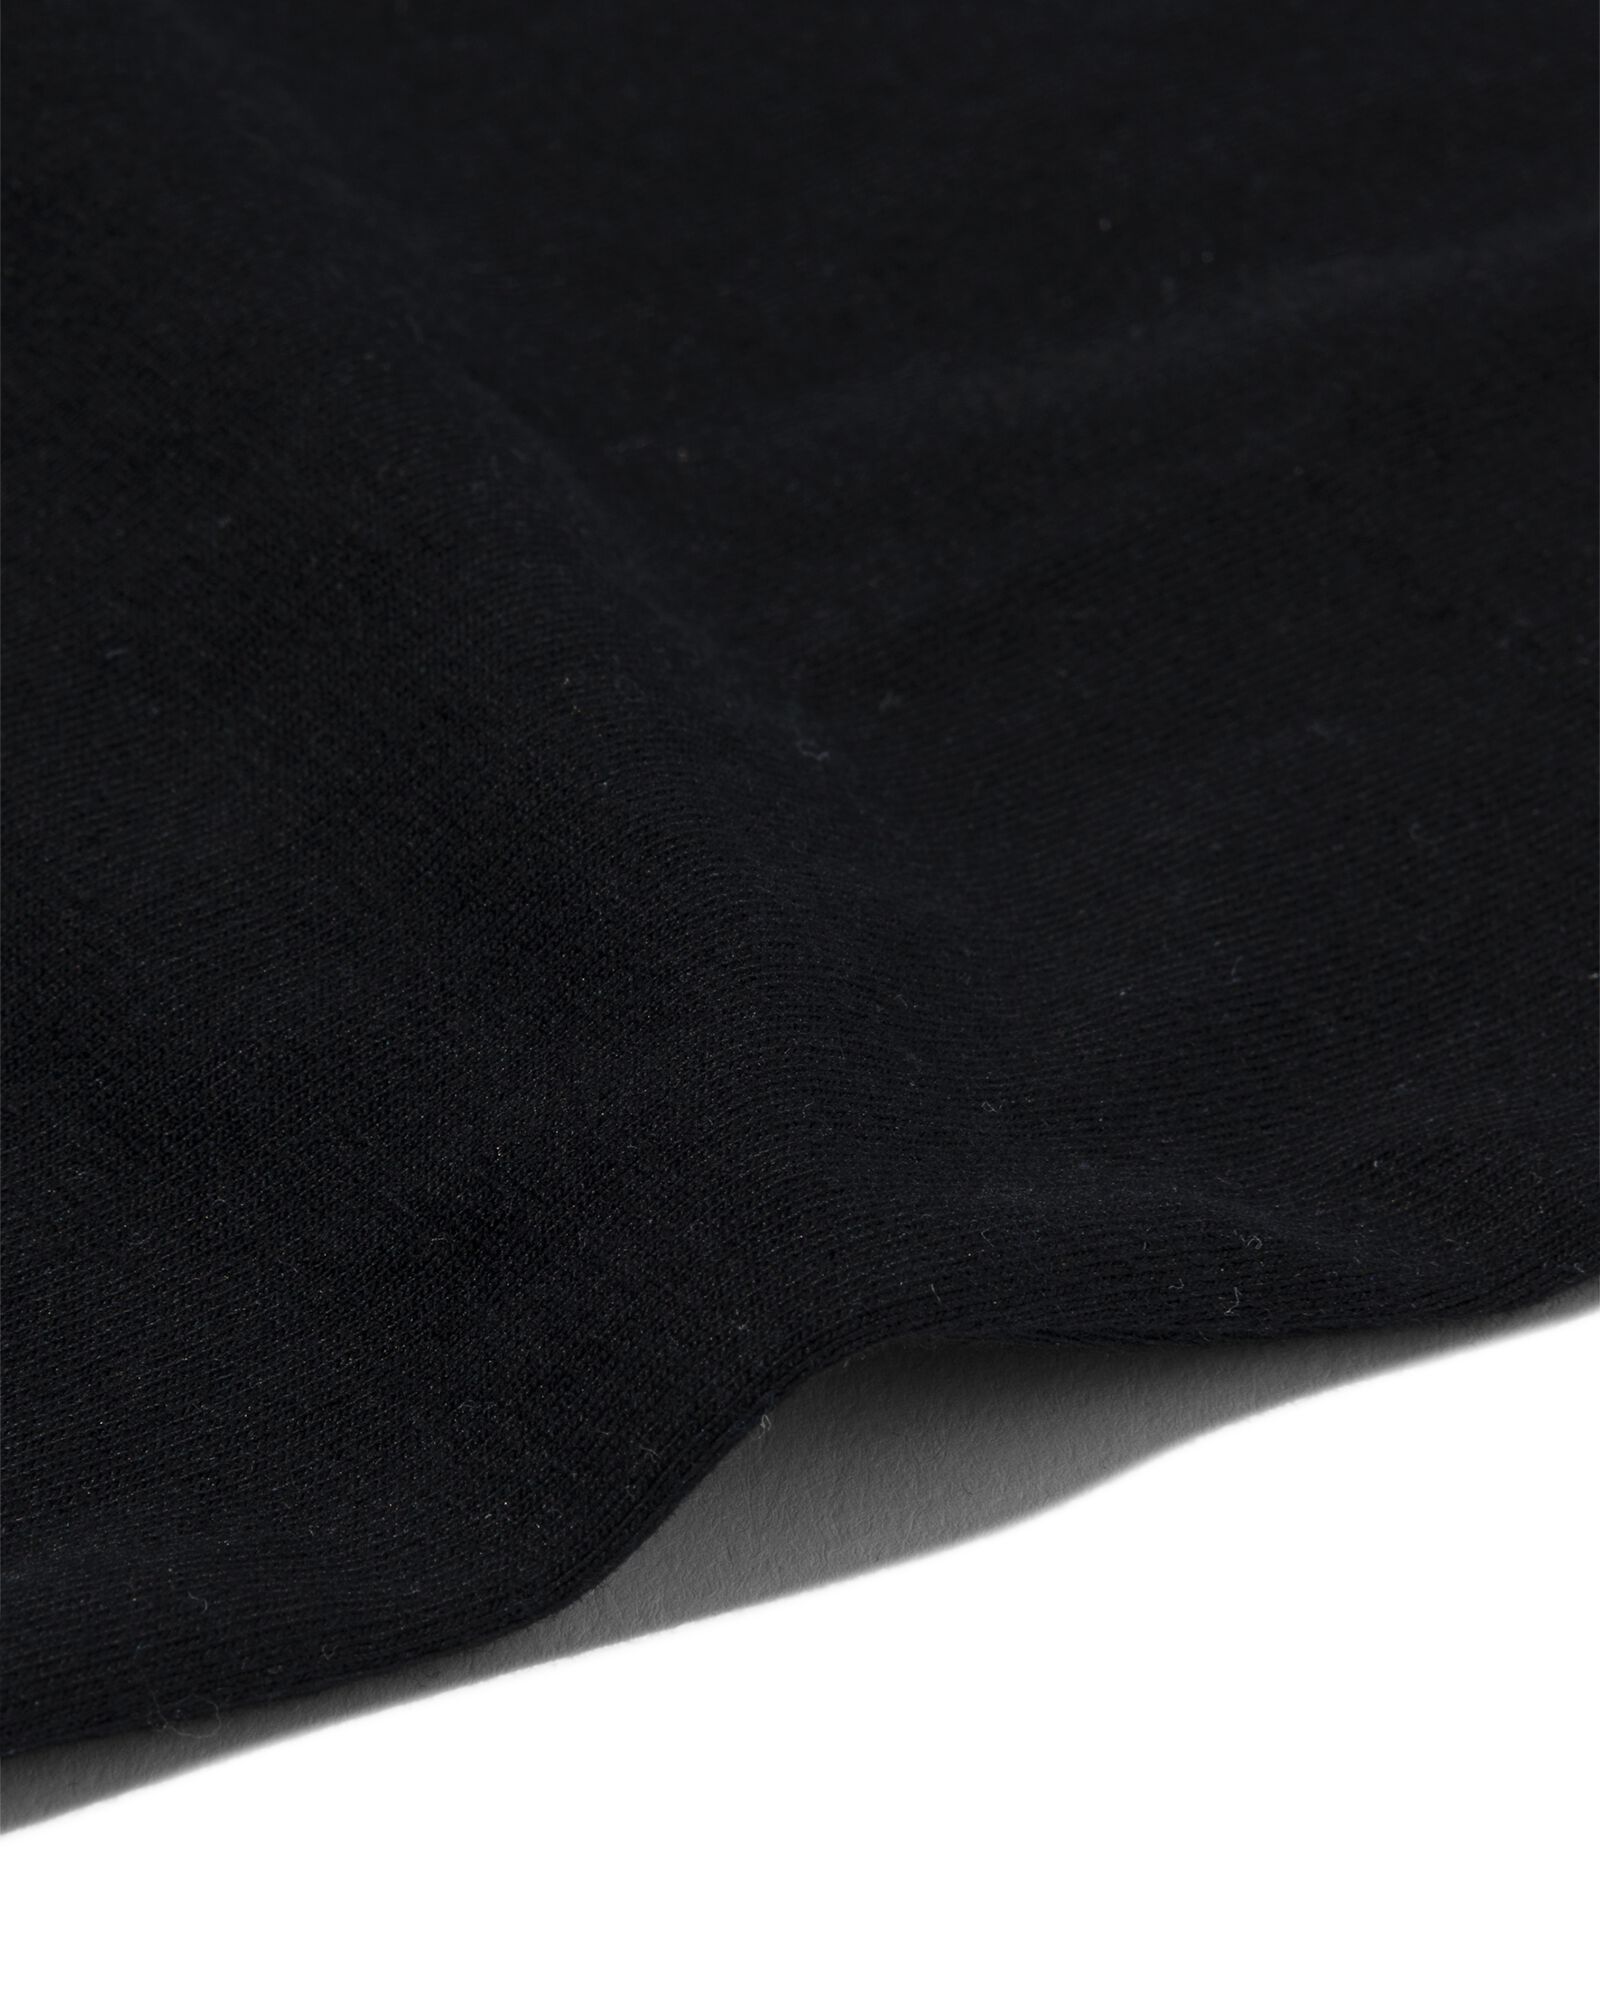 kinderhemden - 2 stuks grijsmelange 110/116 - 19280823 - HEMA